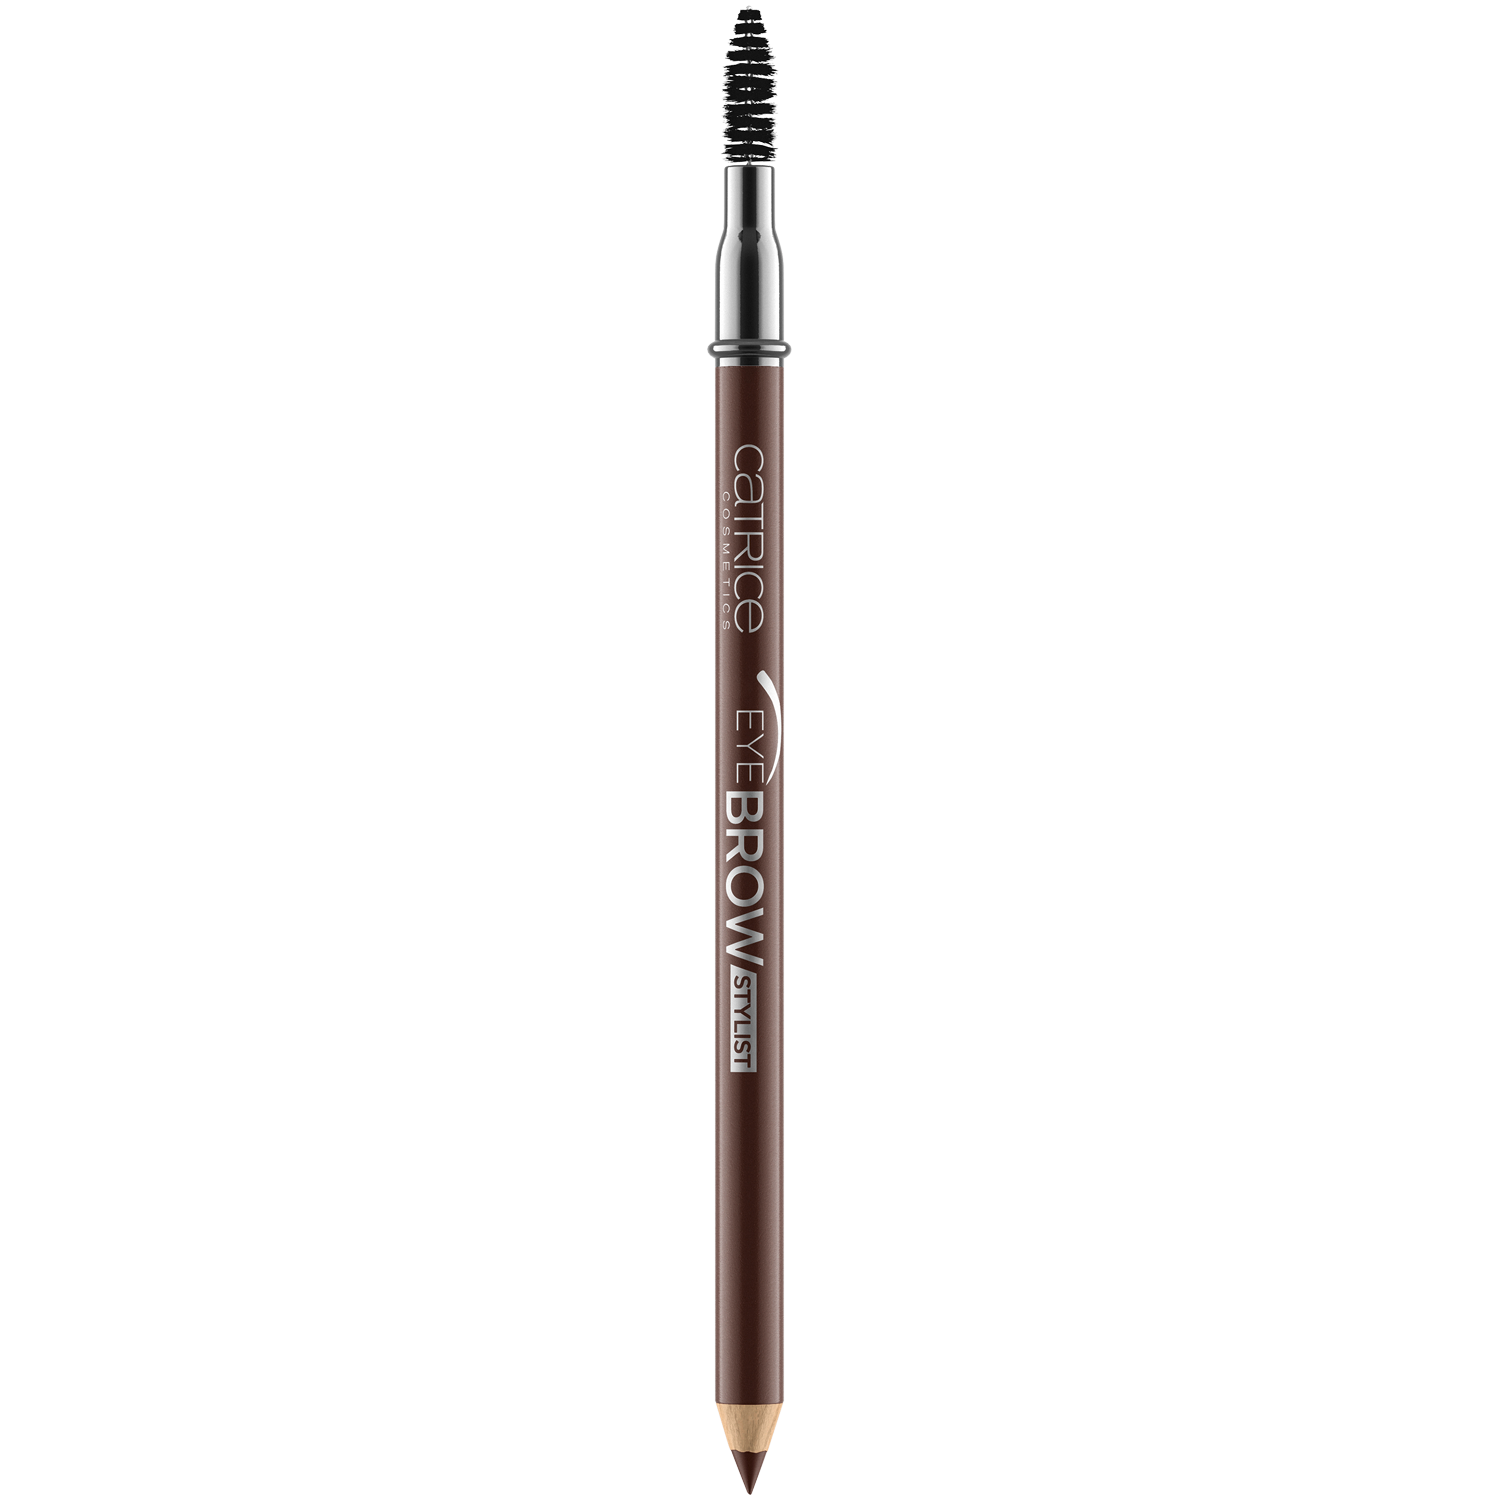 Карандаш с кистью для бровей 025 perfect brown Catrice Brow Stylist, 1,6 гр карандаш для бровей artdeco карандаш для бровей с щеткой eye brow designer